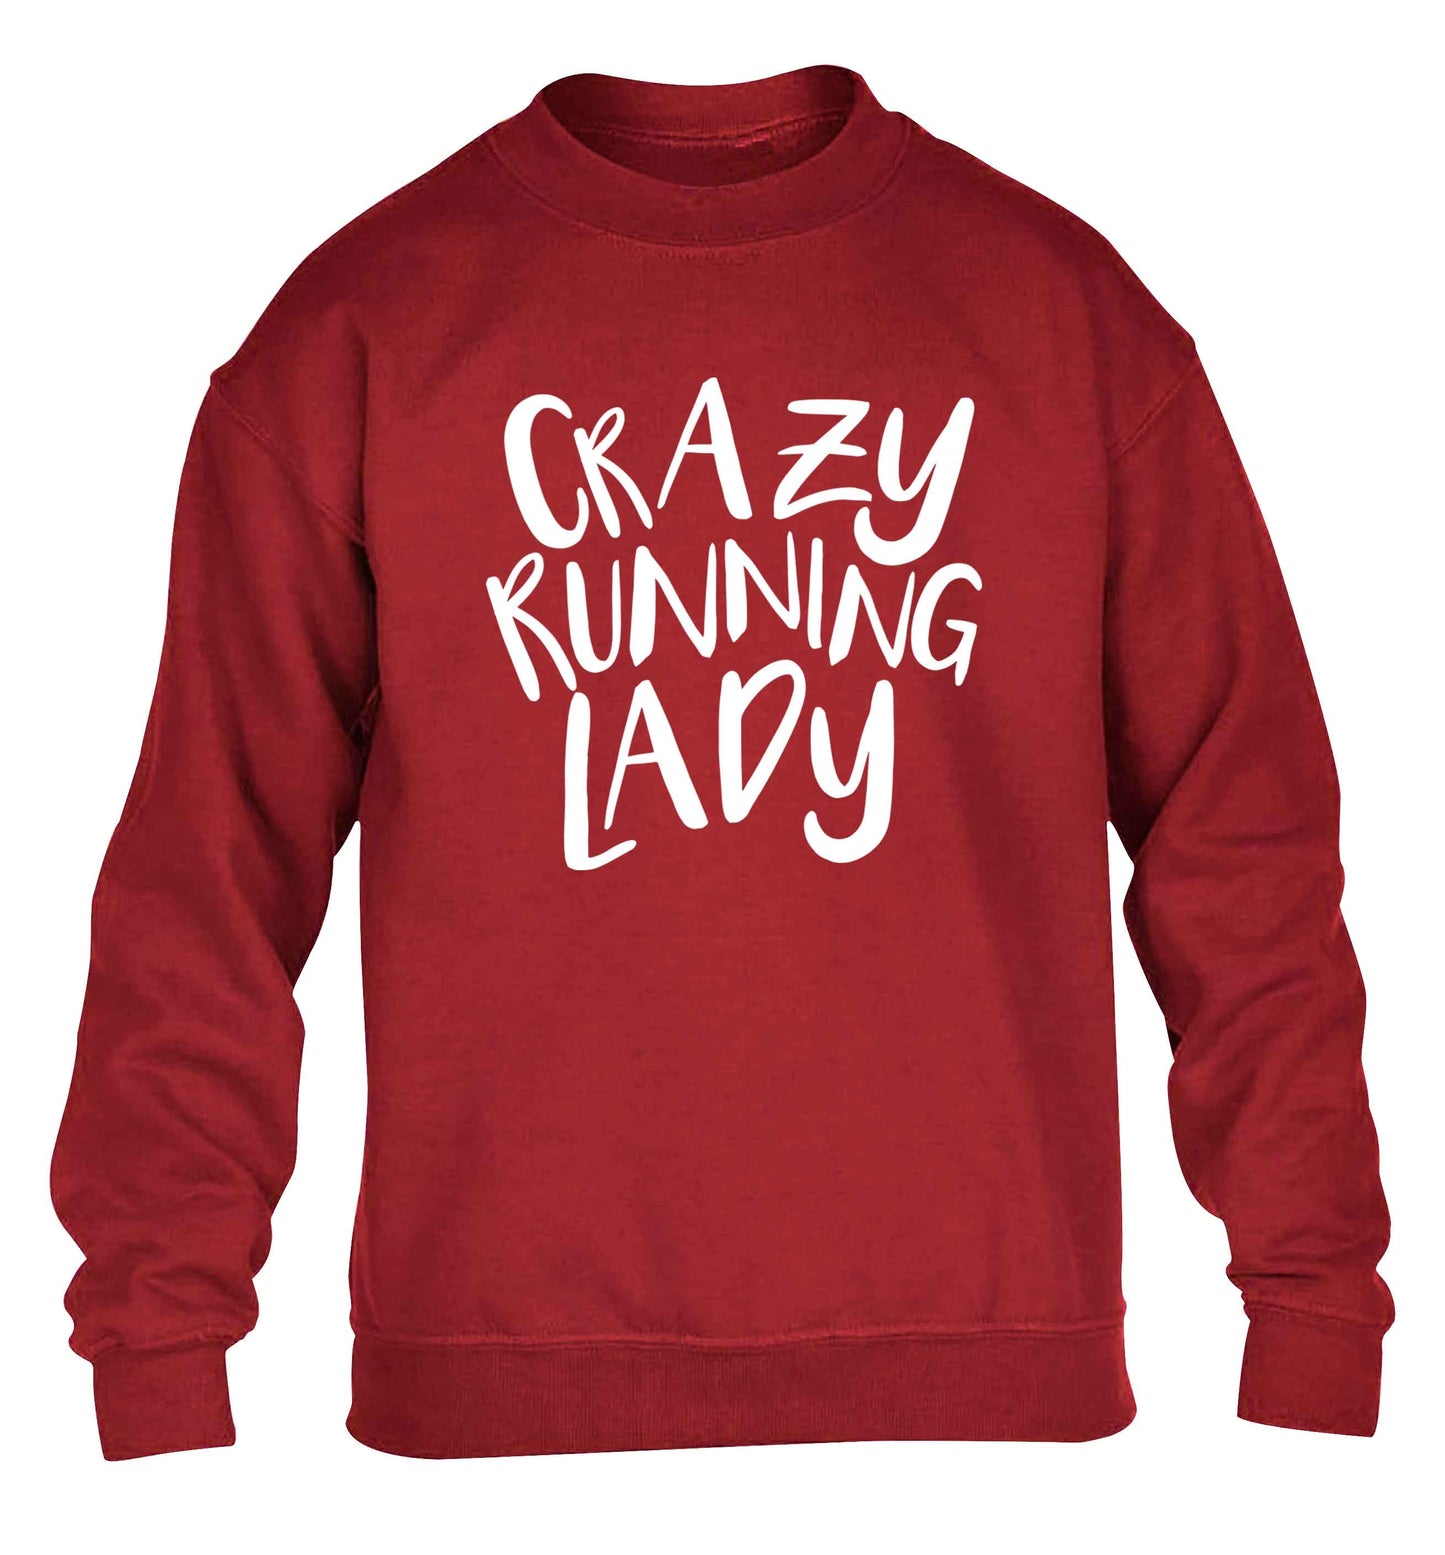 Crazy running lady children's grey sweater 12-13 Years